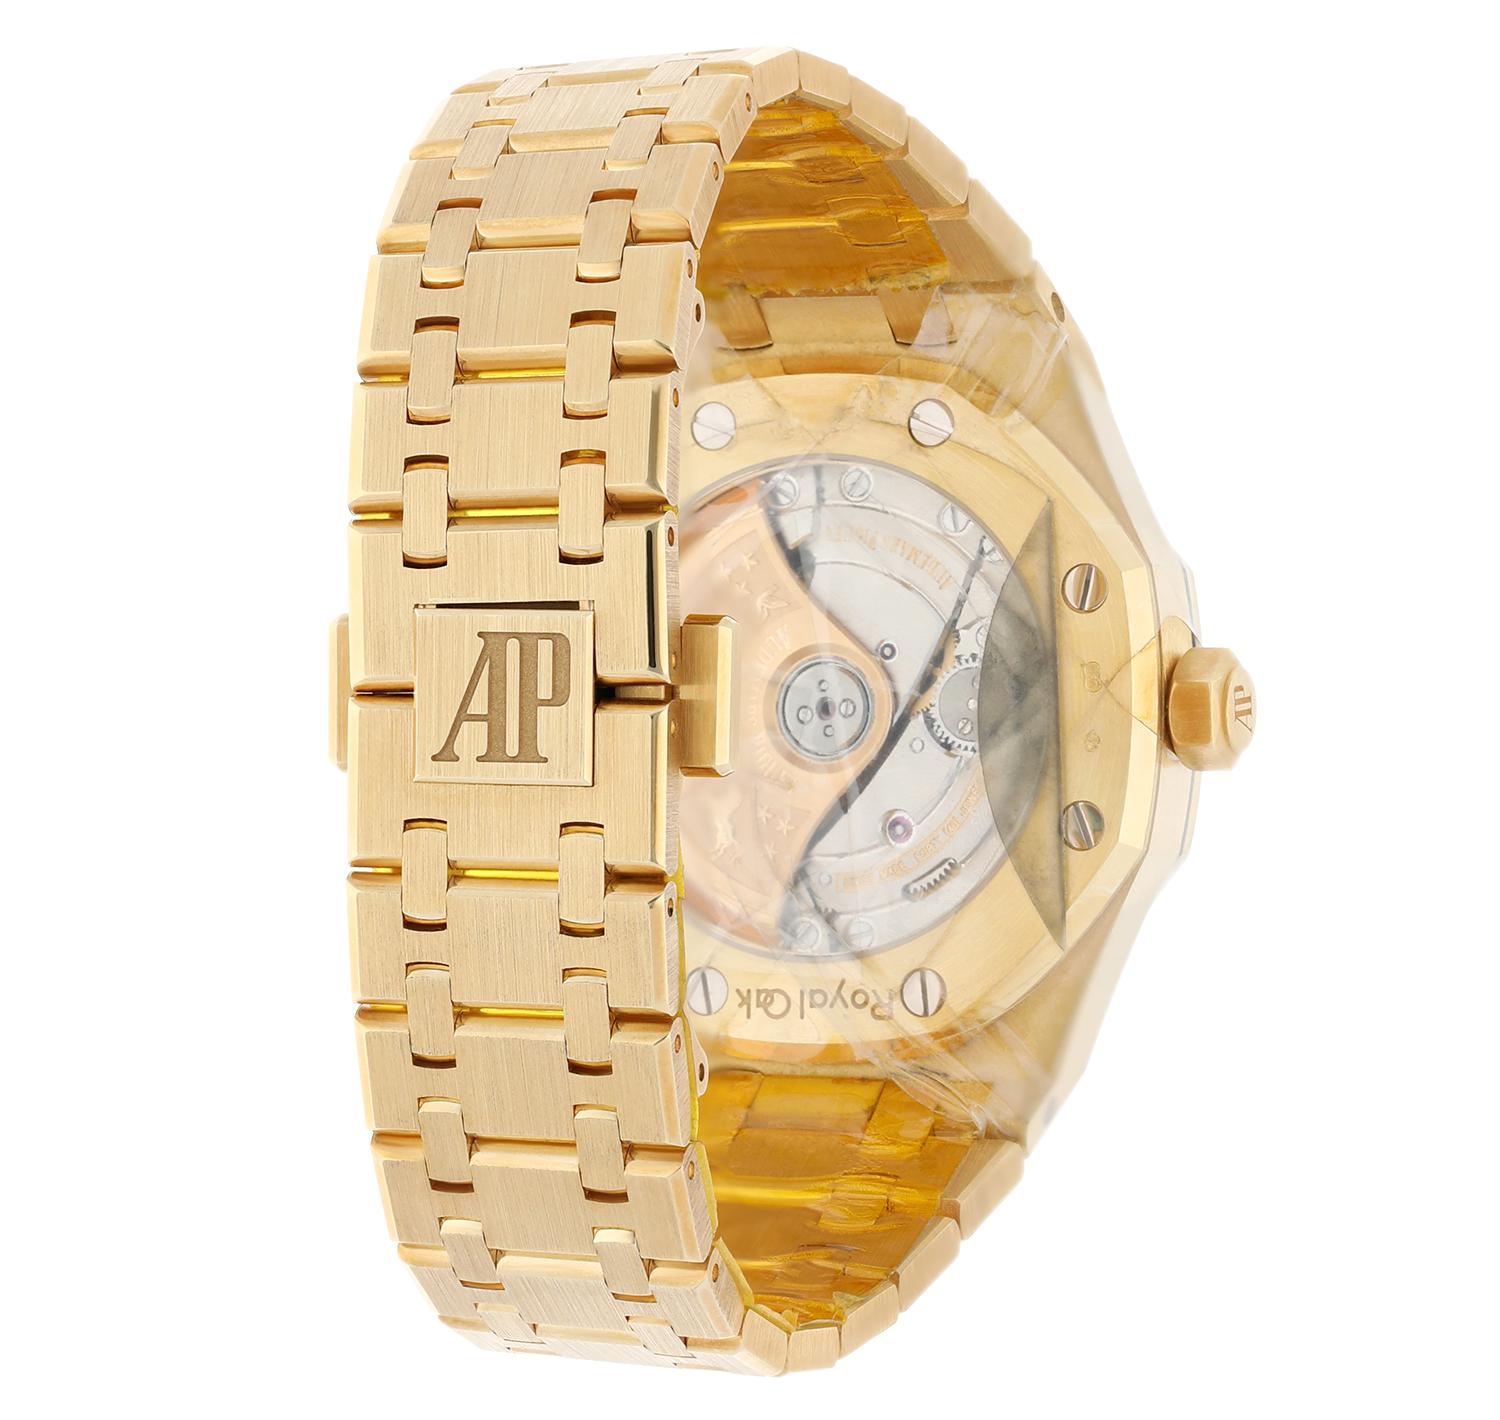 Audemars Piguet Royal Oak Watch 37MM White Index Dial Yellow Gold Watch UNWORN For Sale 1